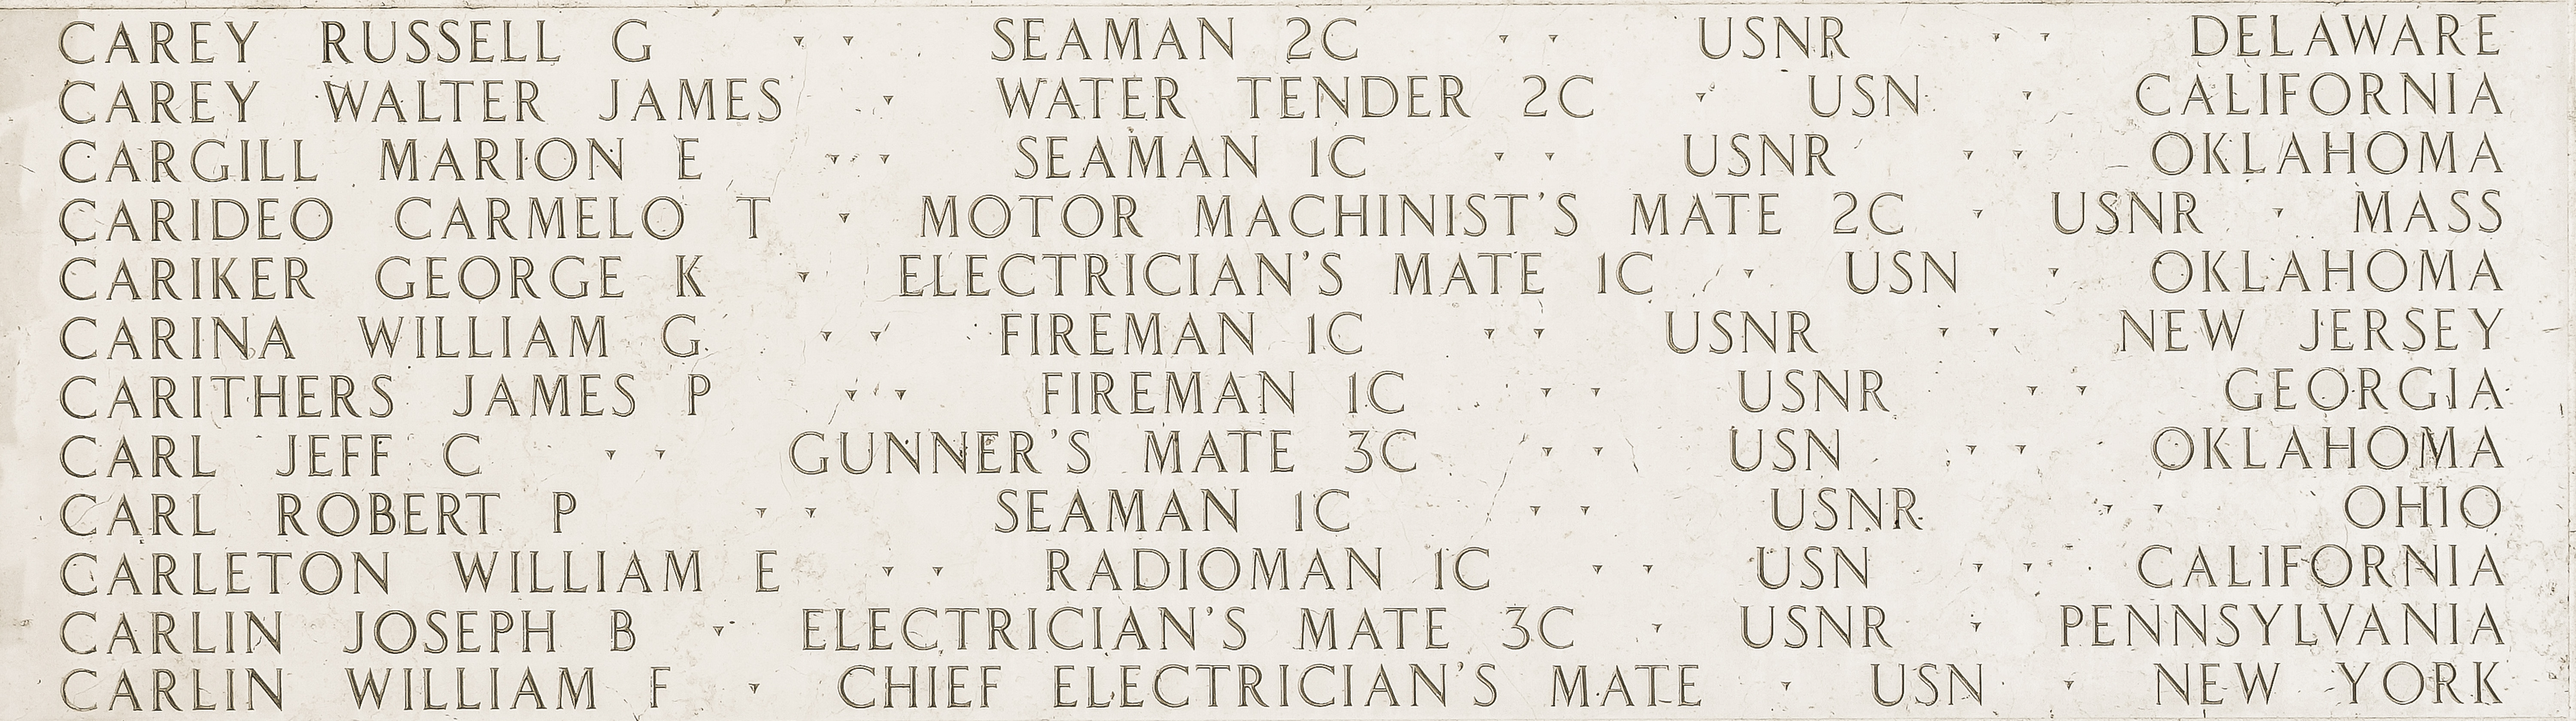 William F. Carlin, Chief Electrician's Mate